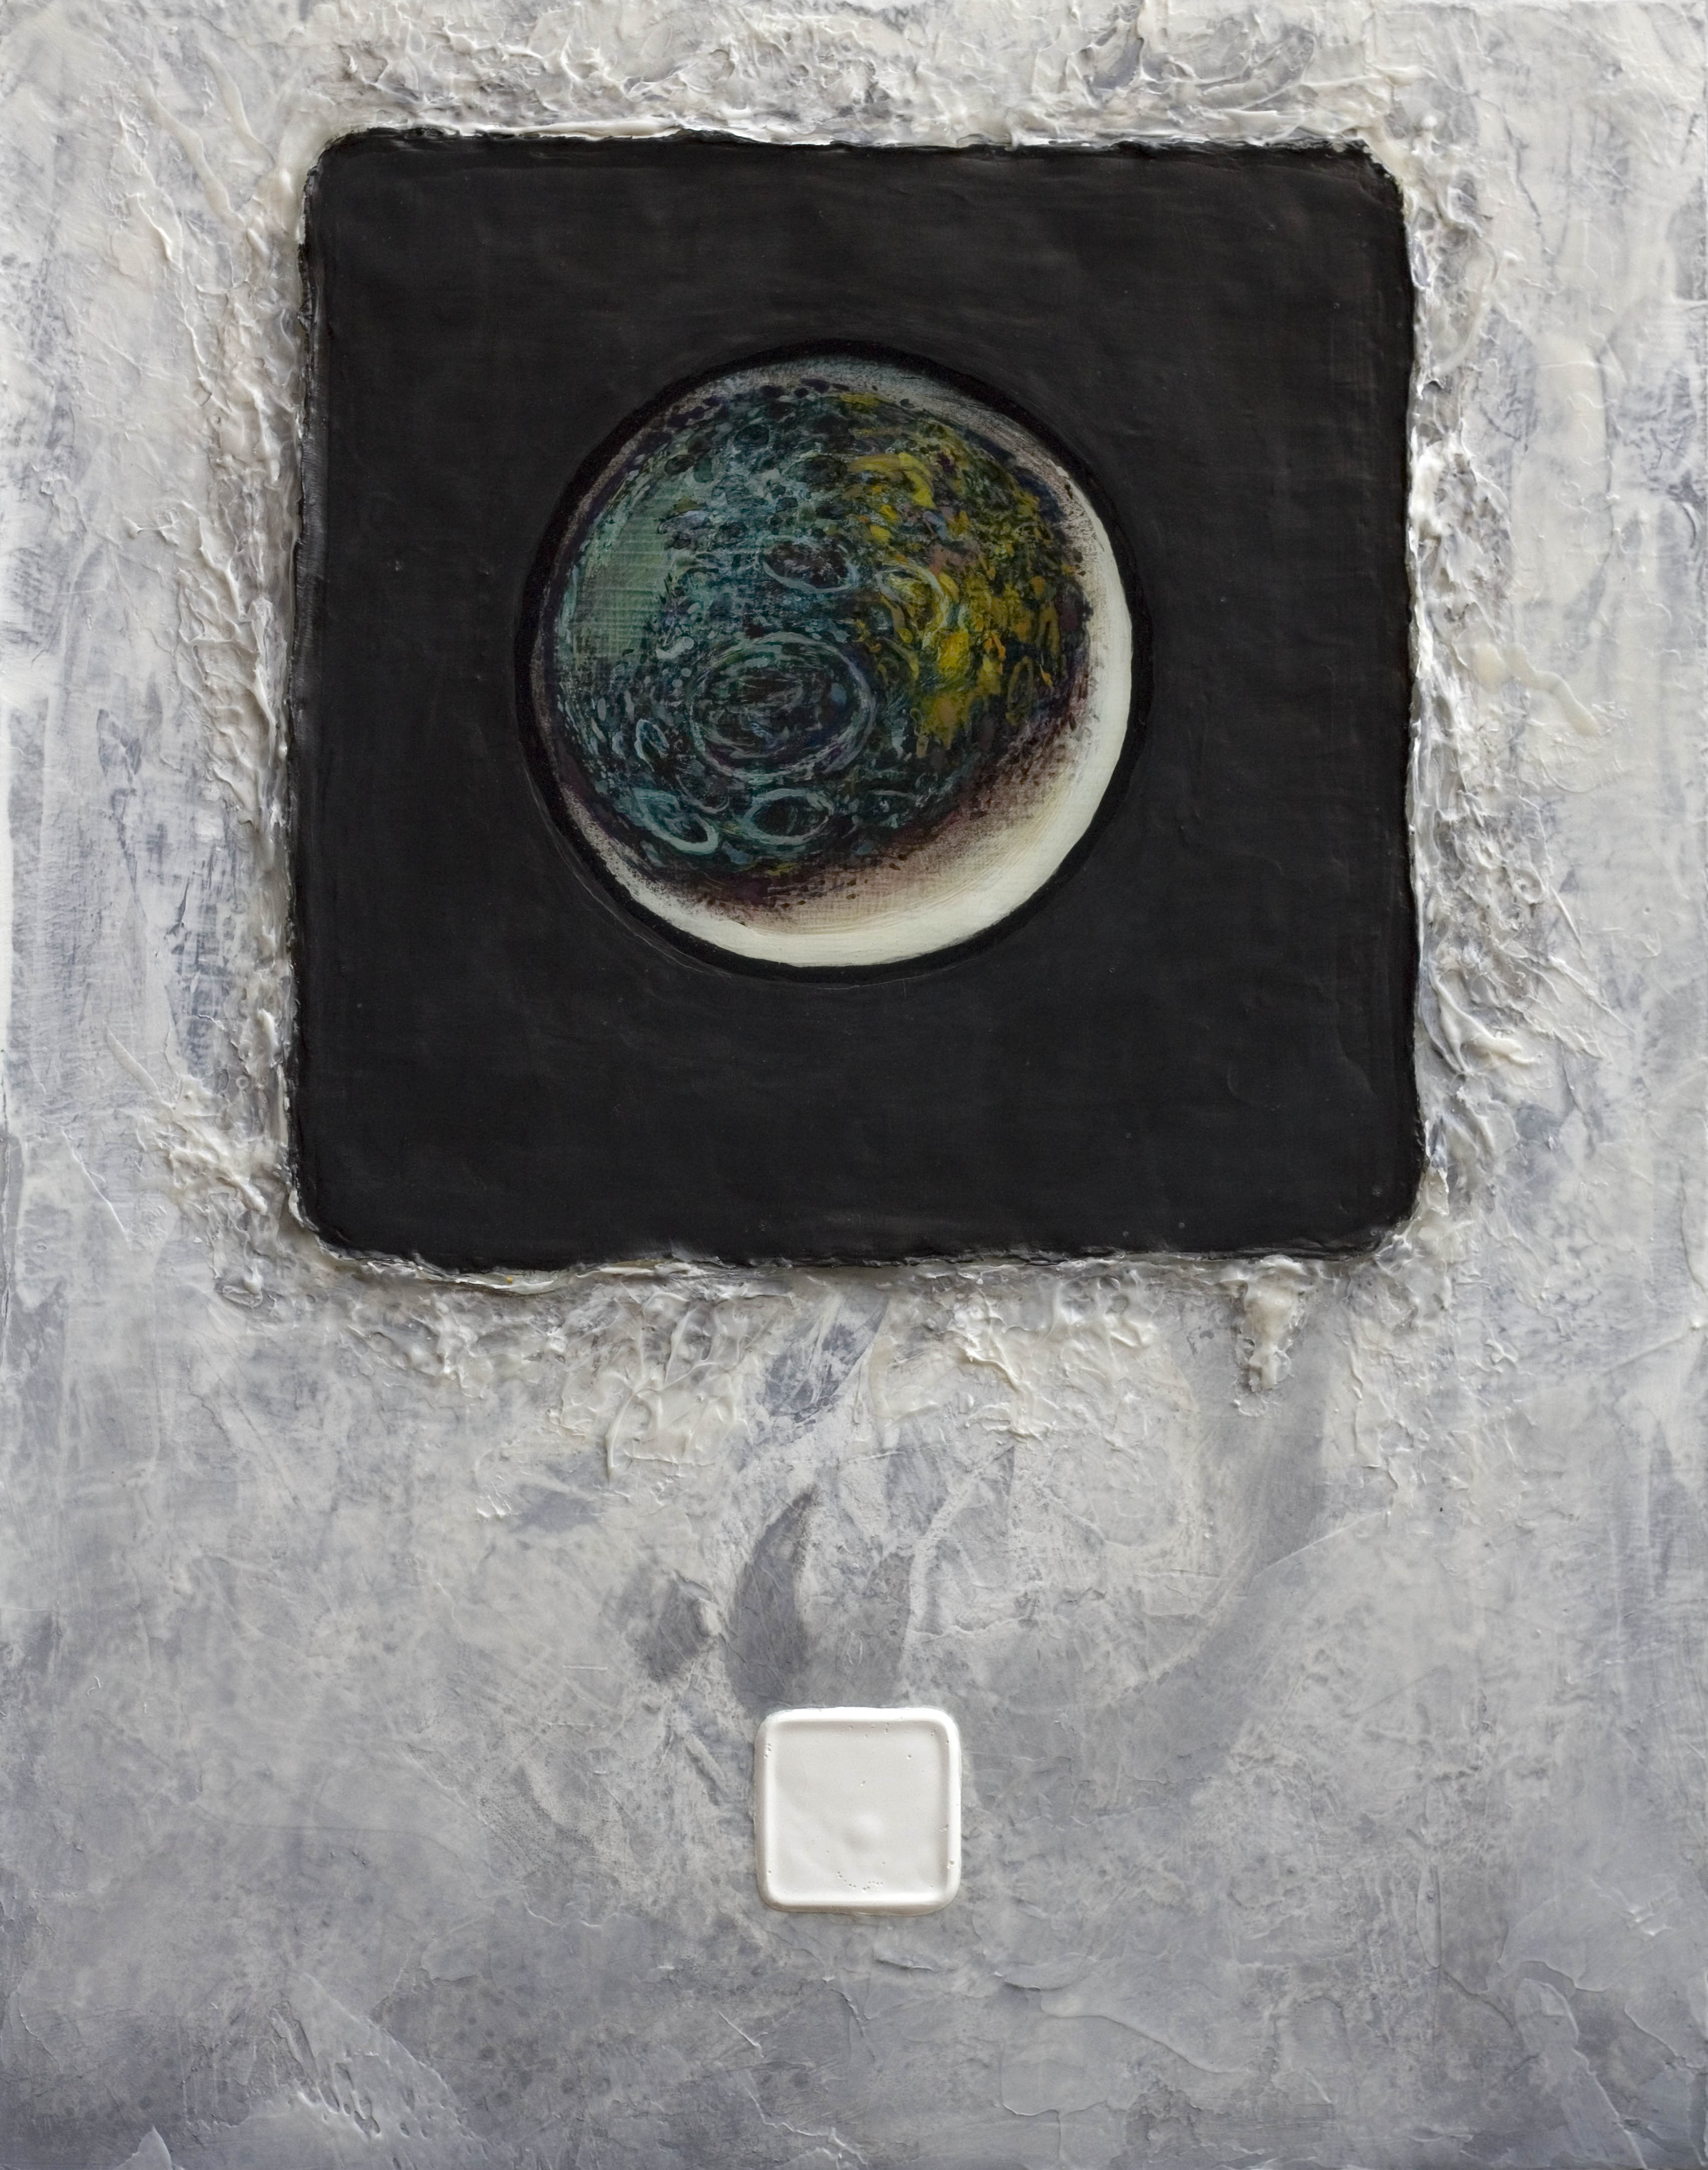 Rey Armenteros, The Moon, 2012. Acrylic on panel, 14 x 11 in.